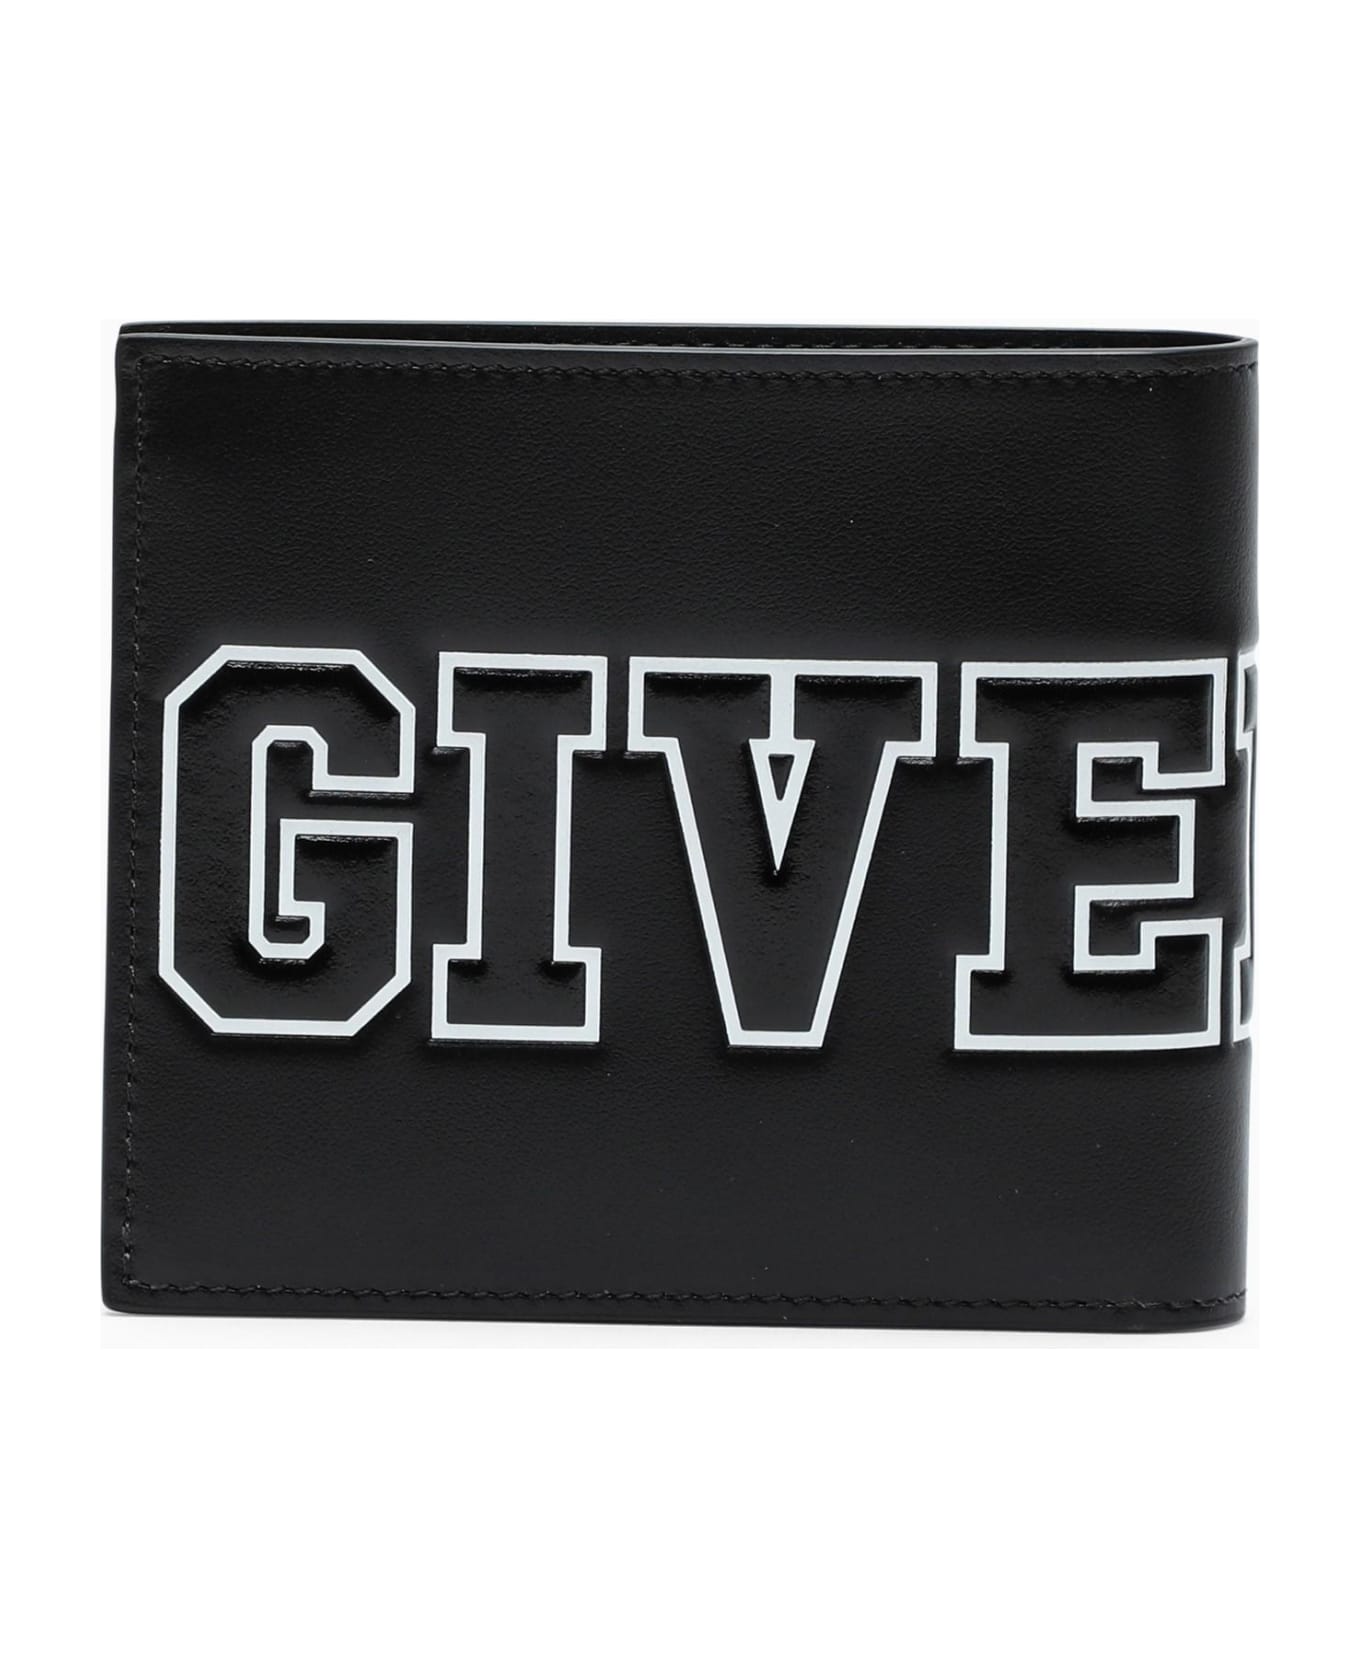 Givenchy Logoed Bi-fold Wallet Black - BLACK